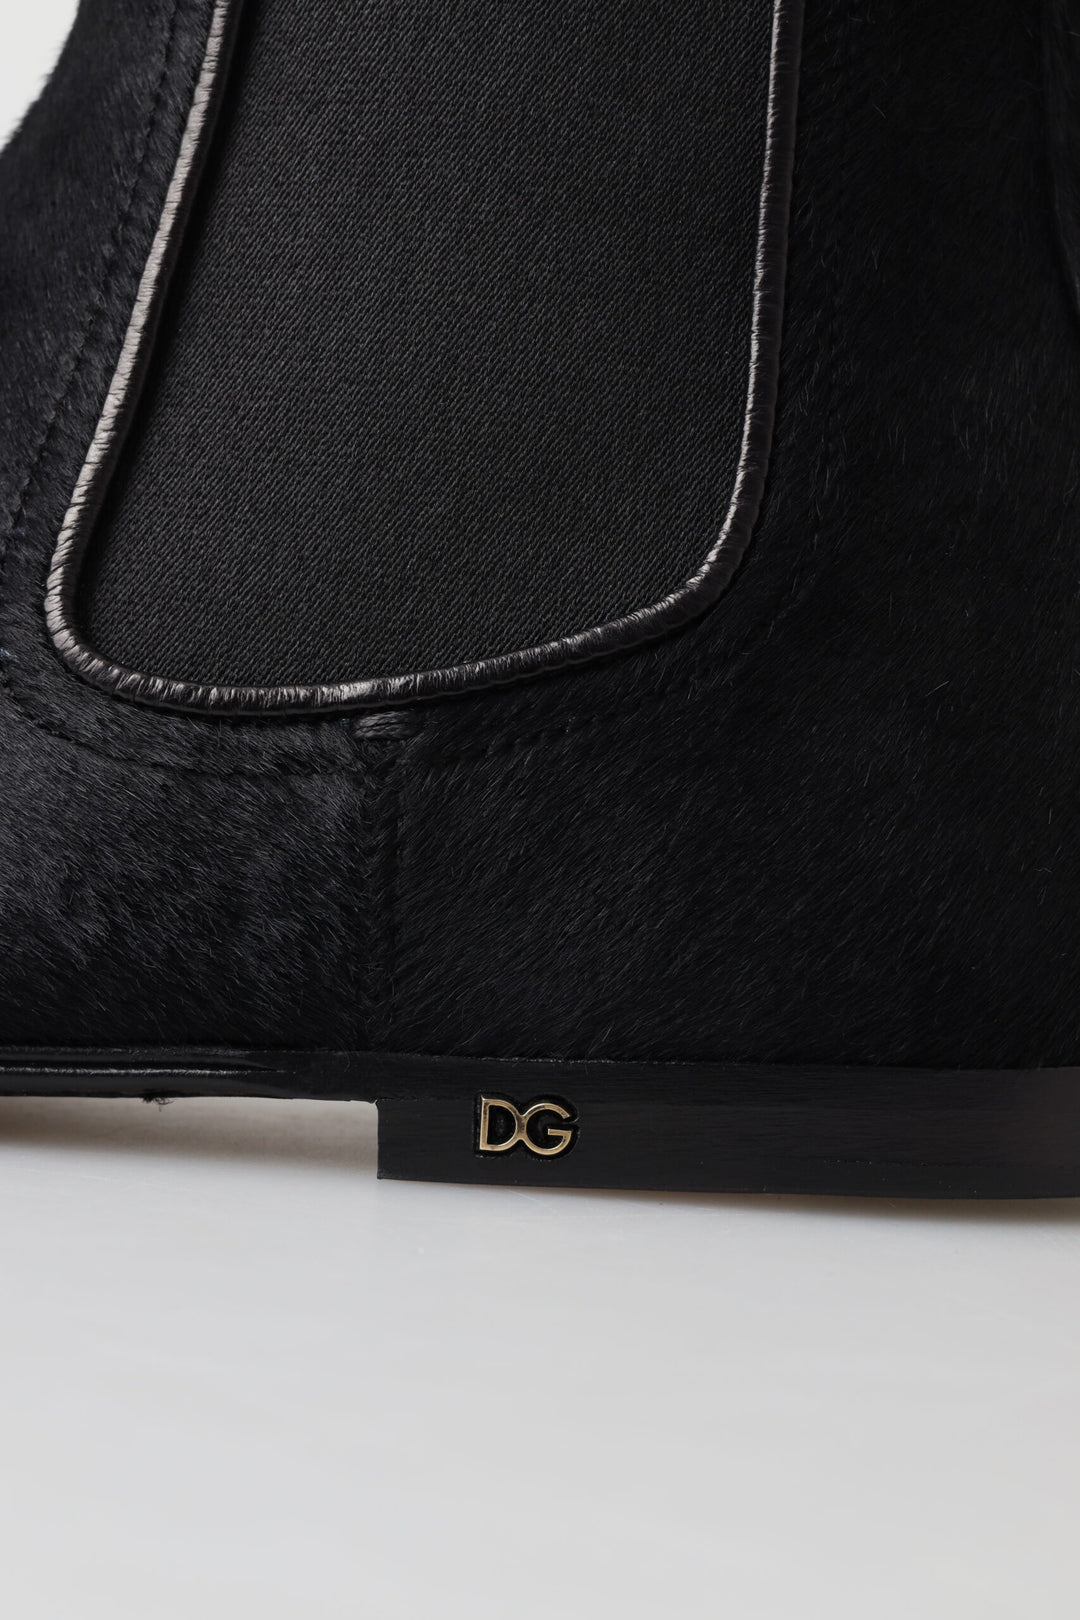 Dolce & Gabbana Elite Italian Leather Chelsea Boots